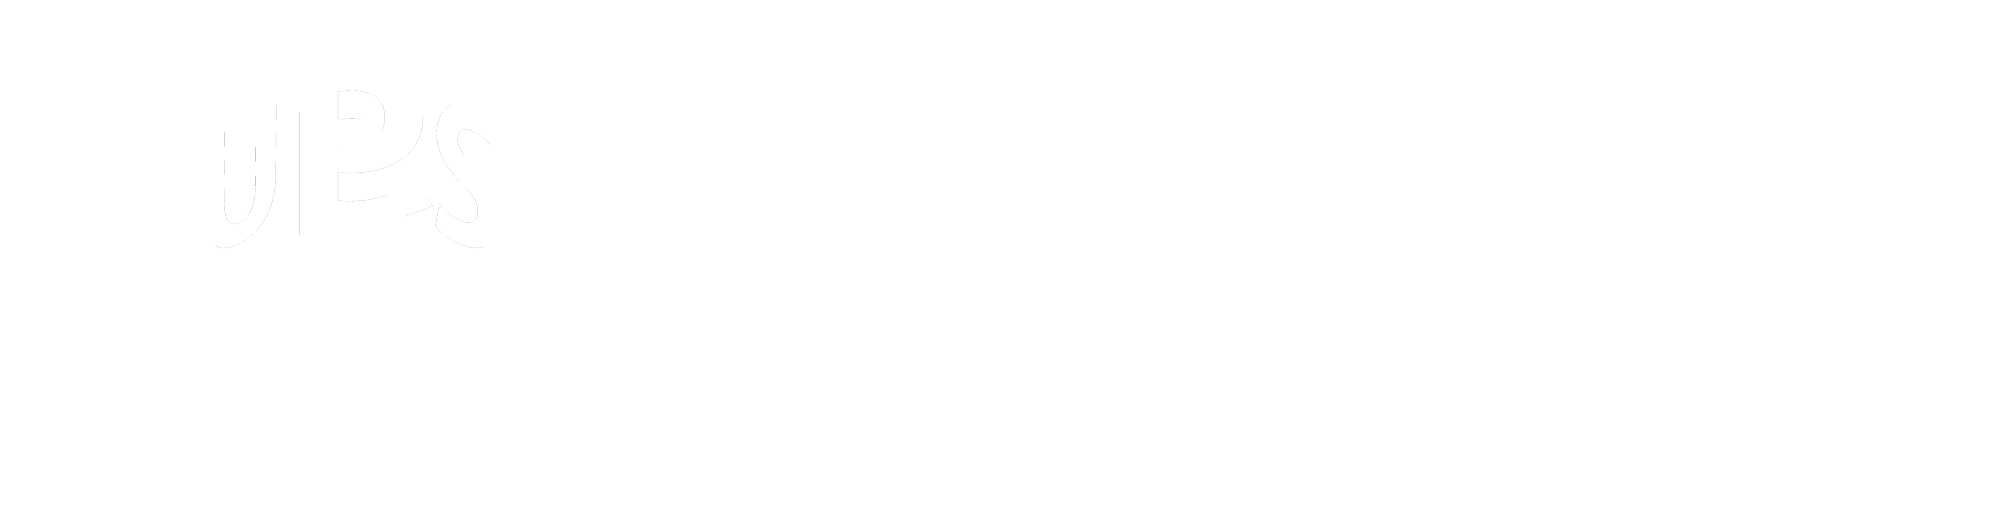 ups web design